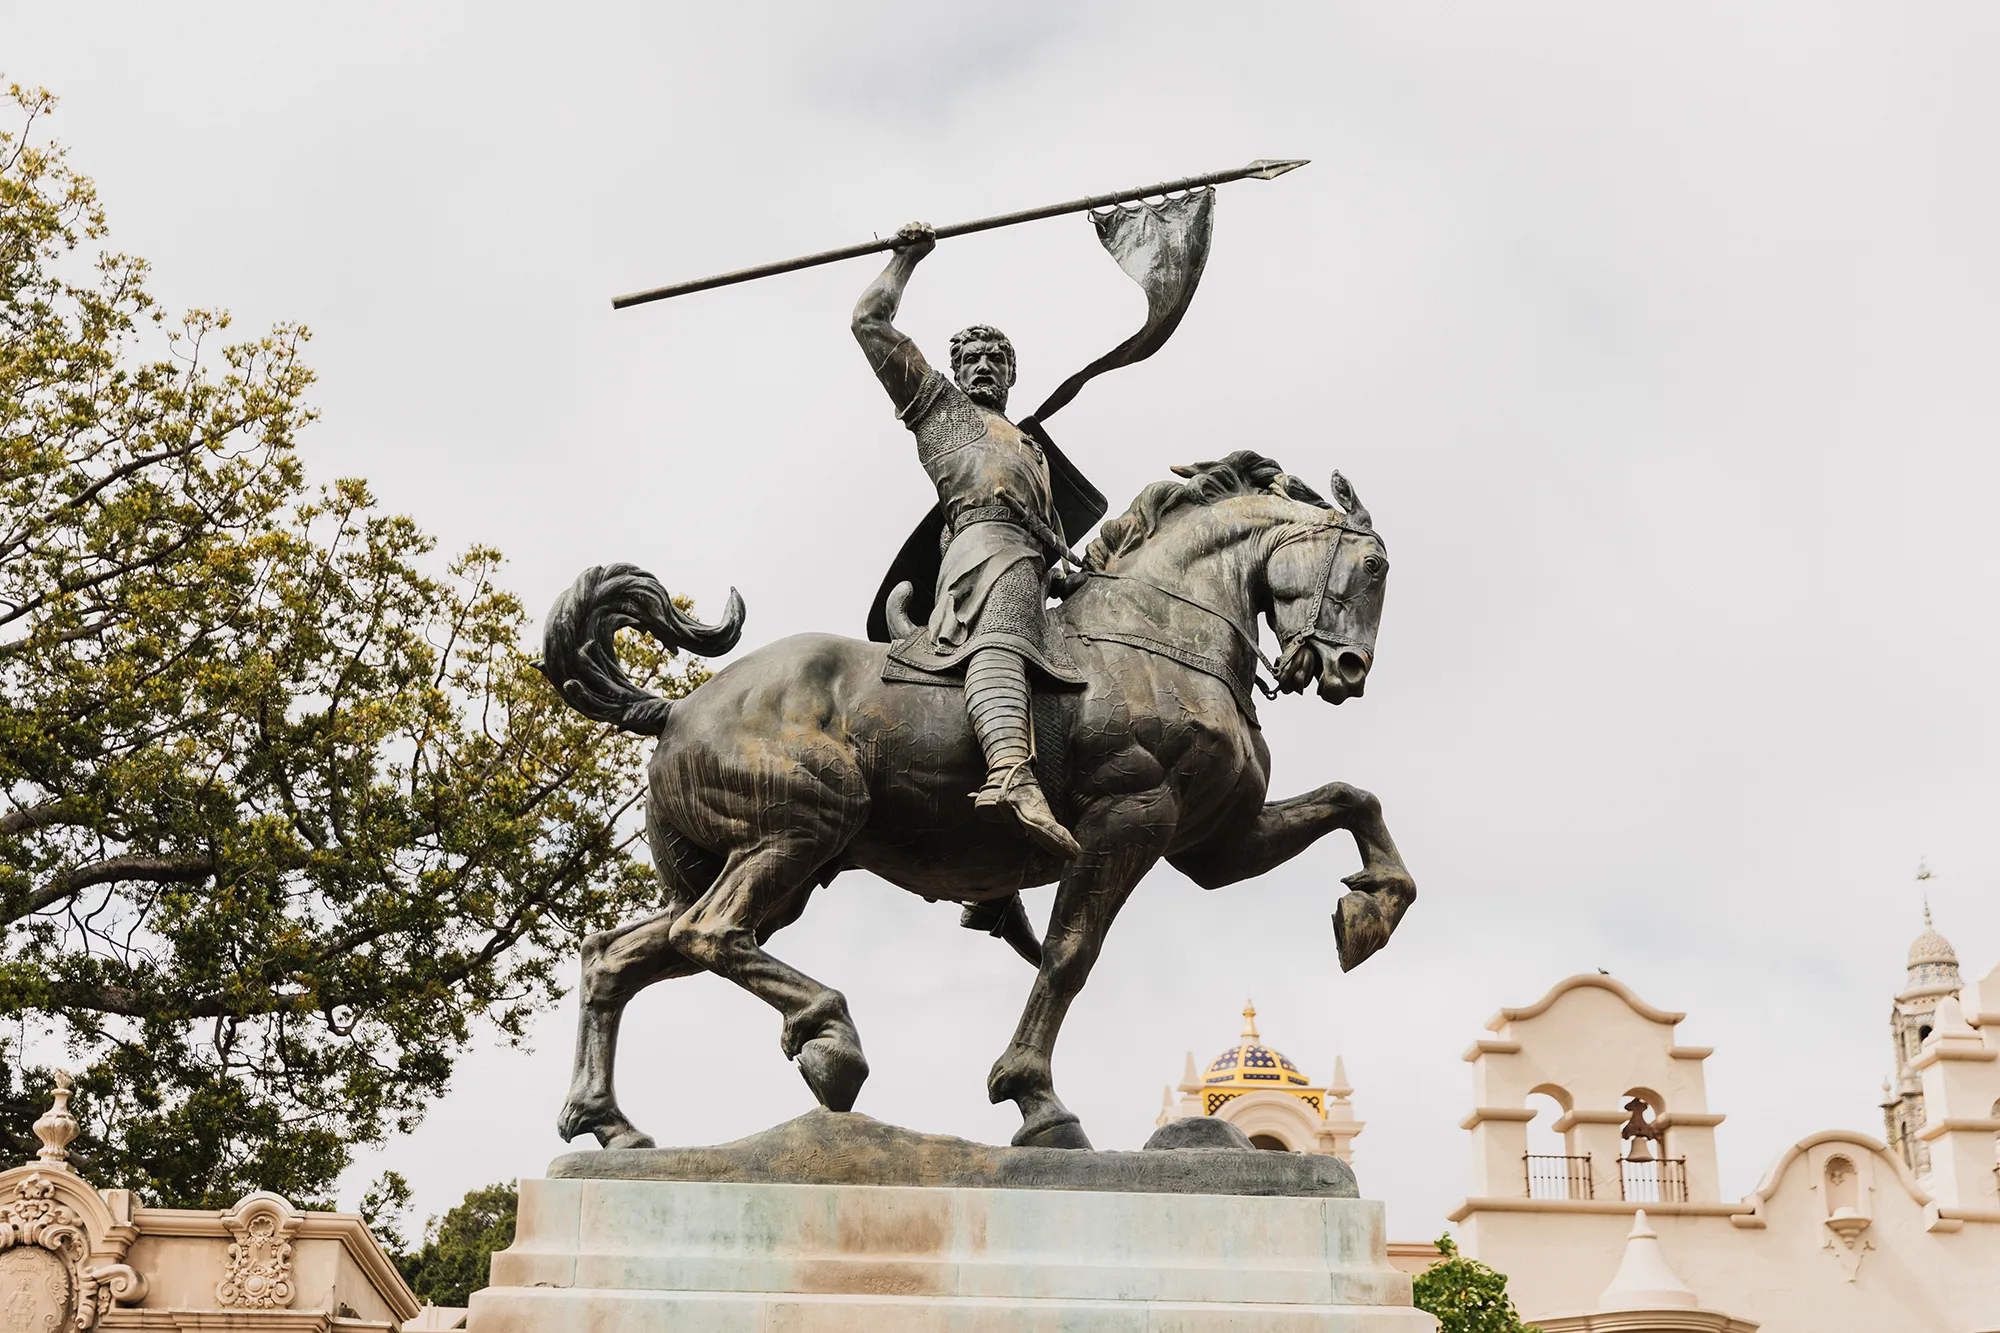 El Cid statue in Balboa Park.